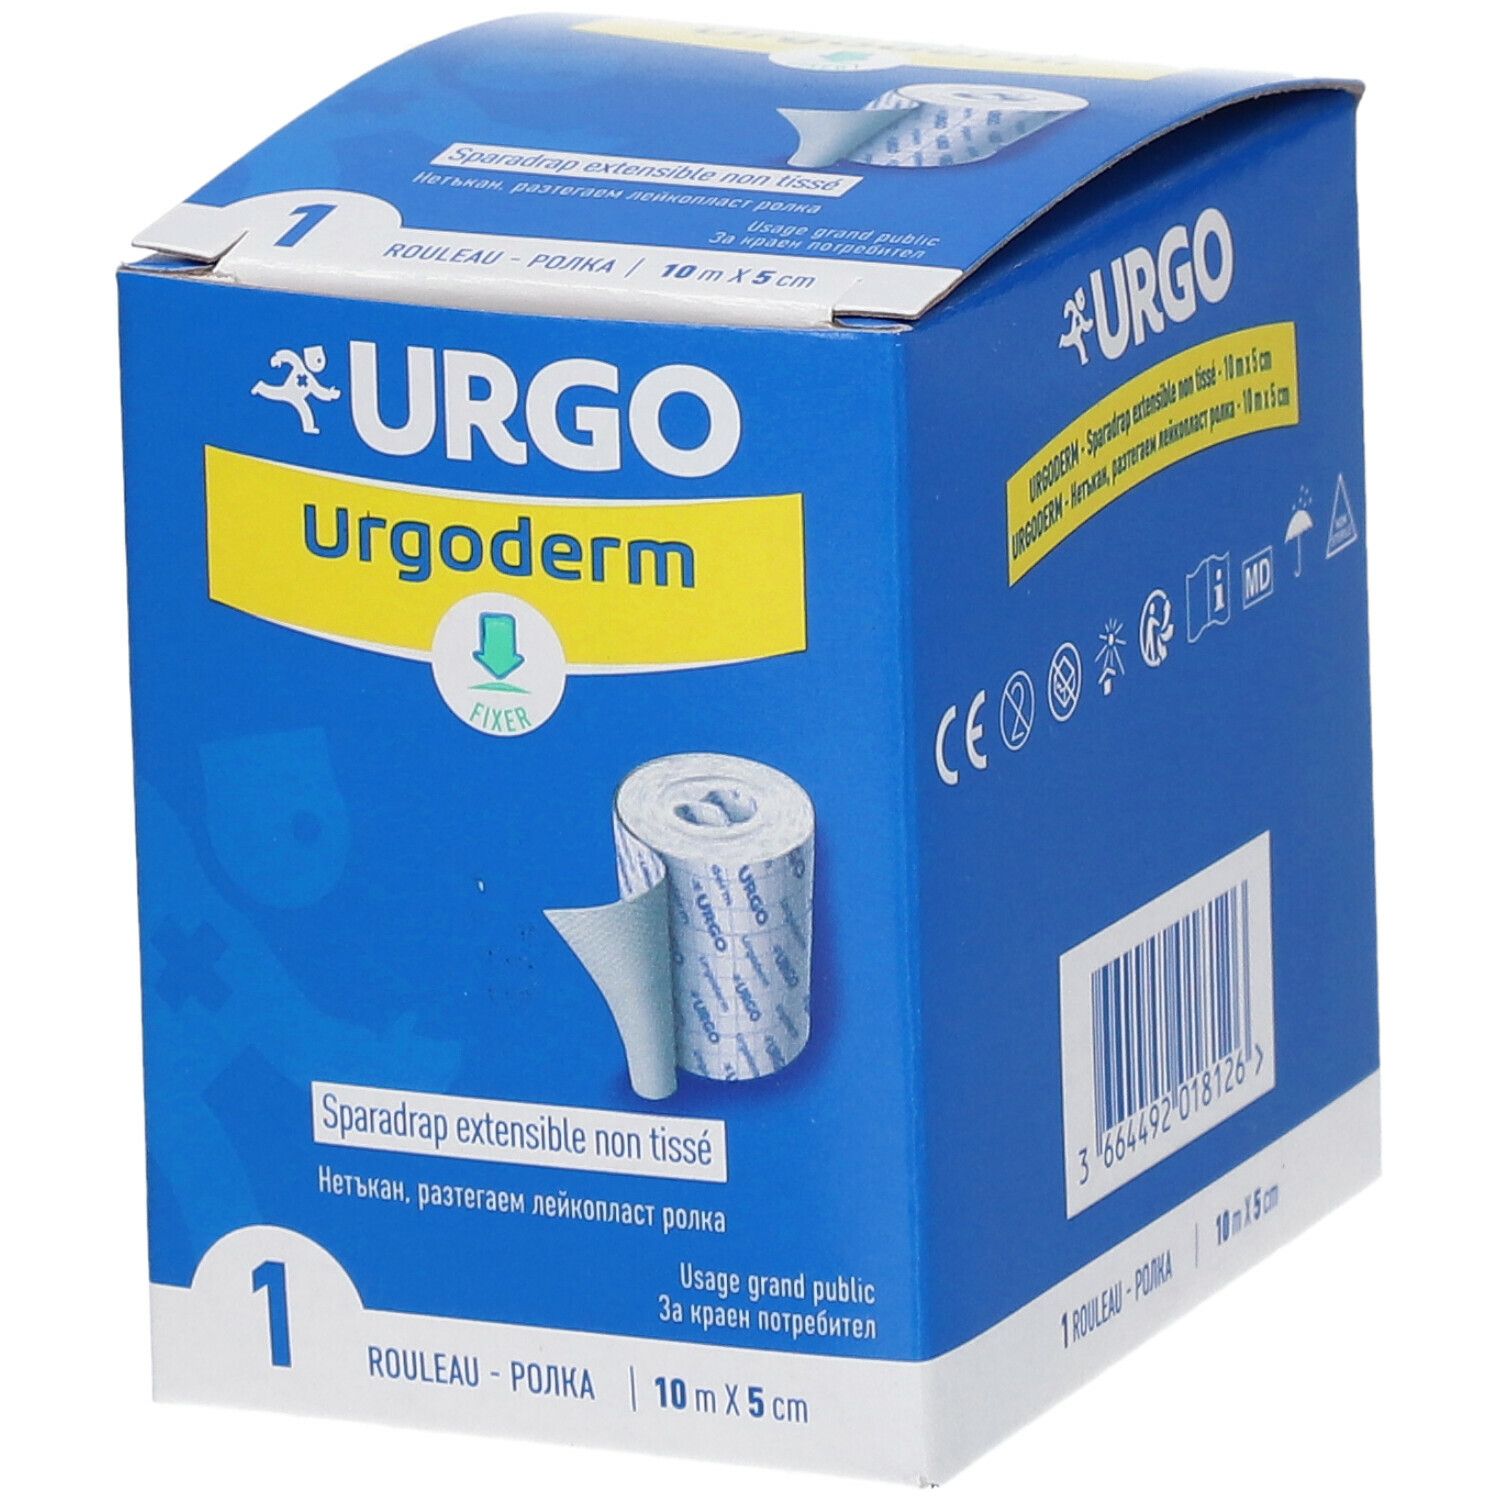 Urgo Urgoderm Sparadrap non tissé extensible 10 m x 5 cm